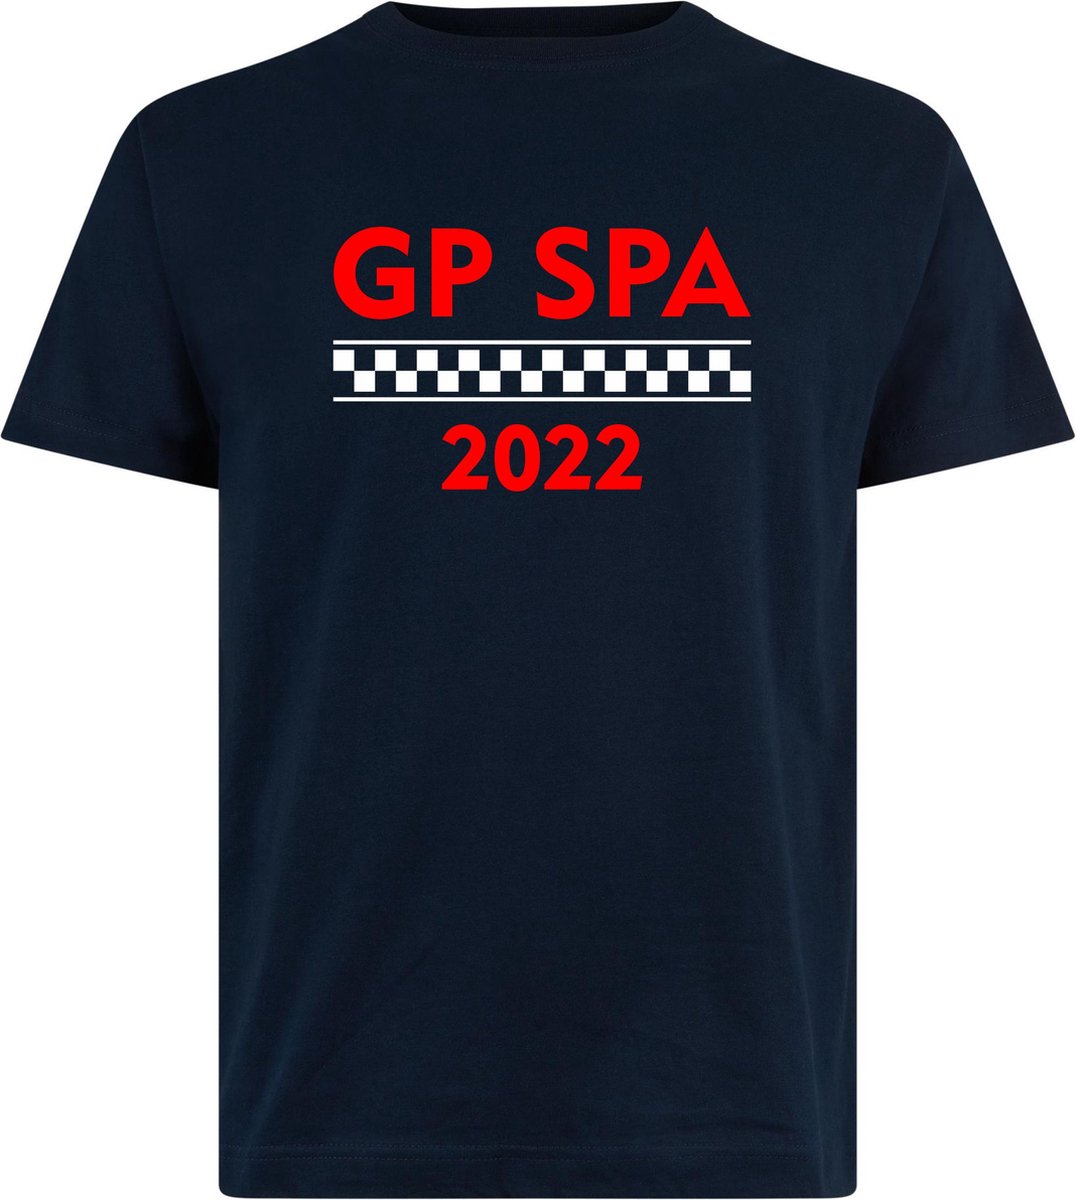 T-shirt GP Spa 2022 | Max Verstappen / Red Bull Racing / Formule 1 fan | Grand Prix Circuit Spa-Francorchamps | kleding shirt | Navy | maat S